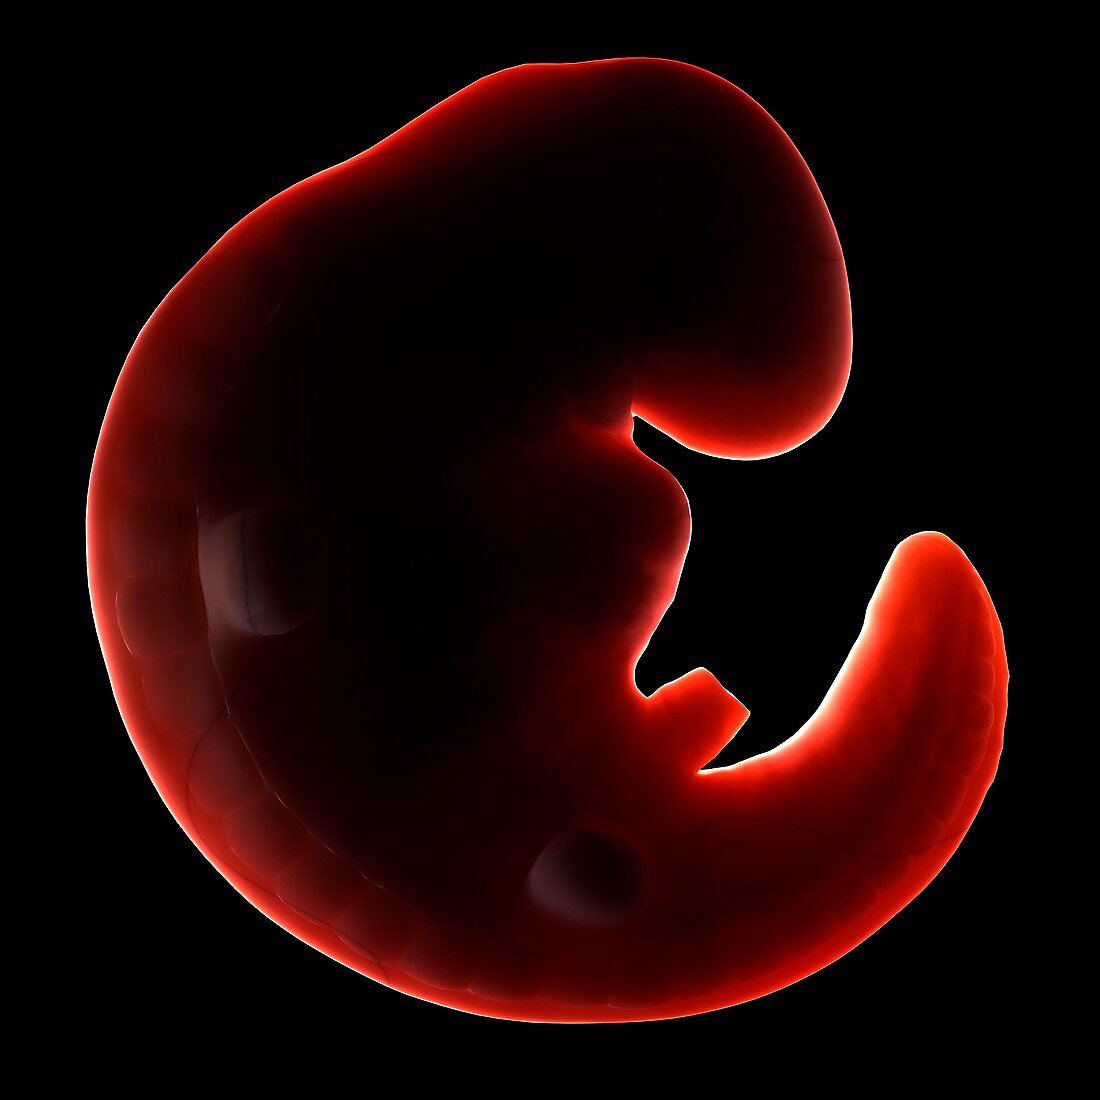 Three week old embryo,artwork